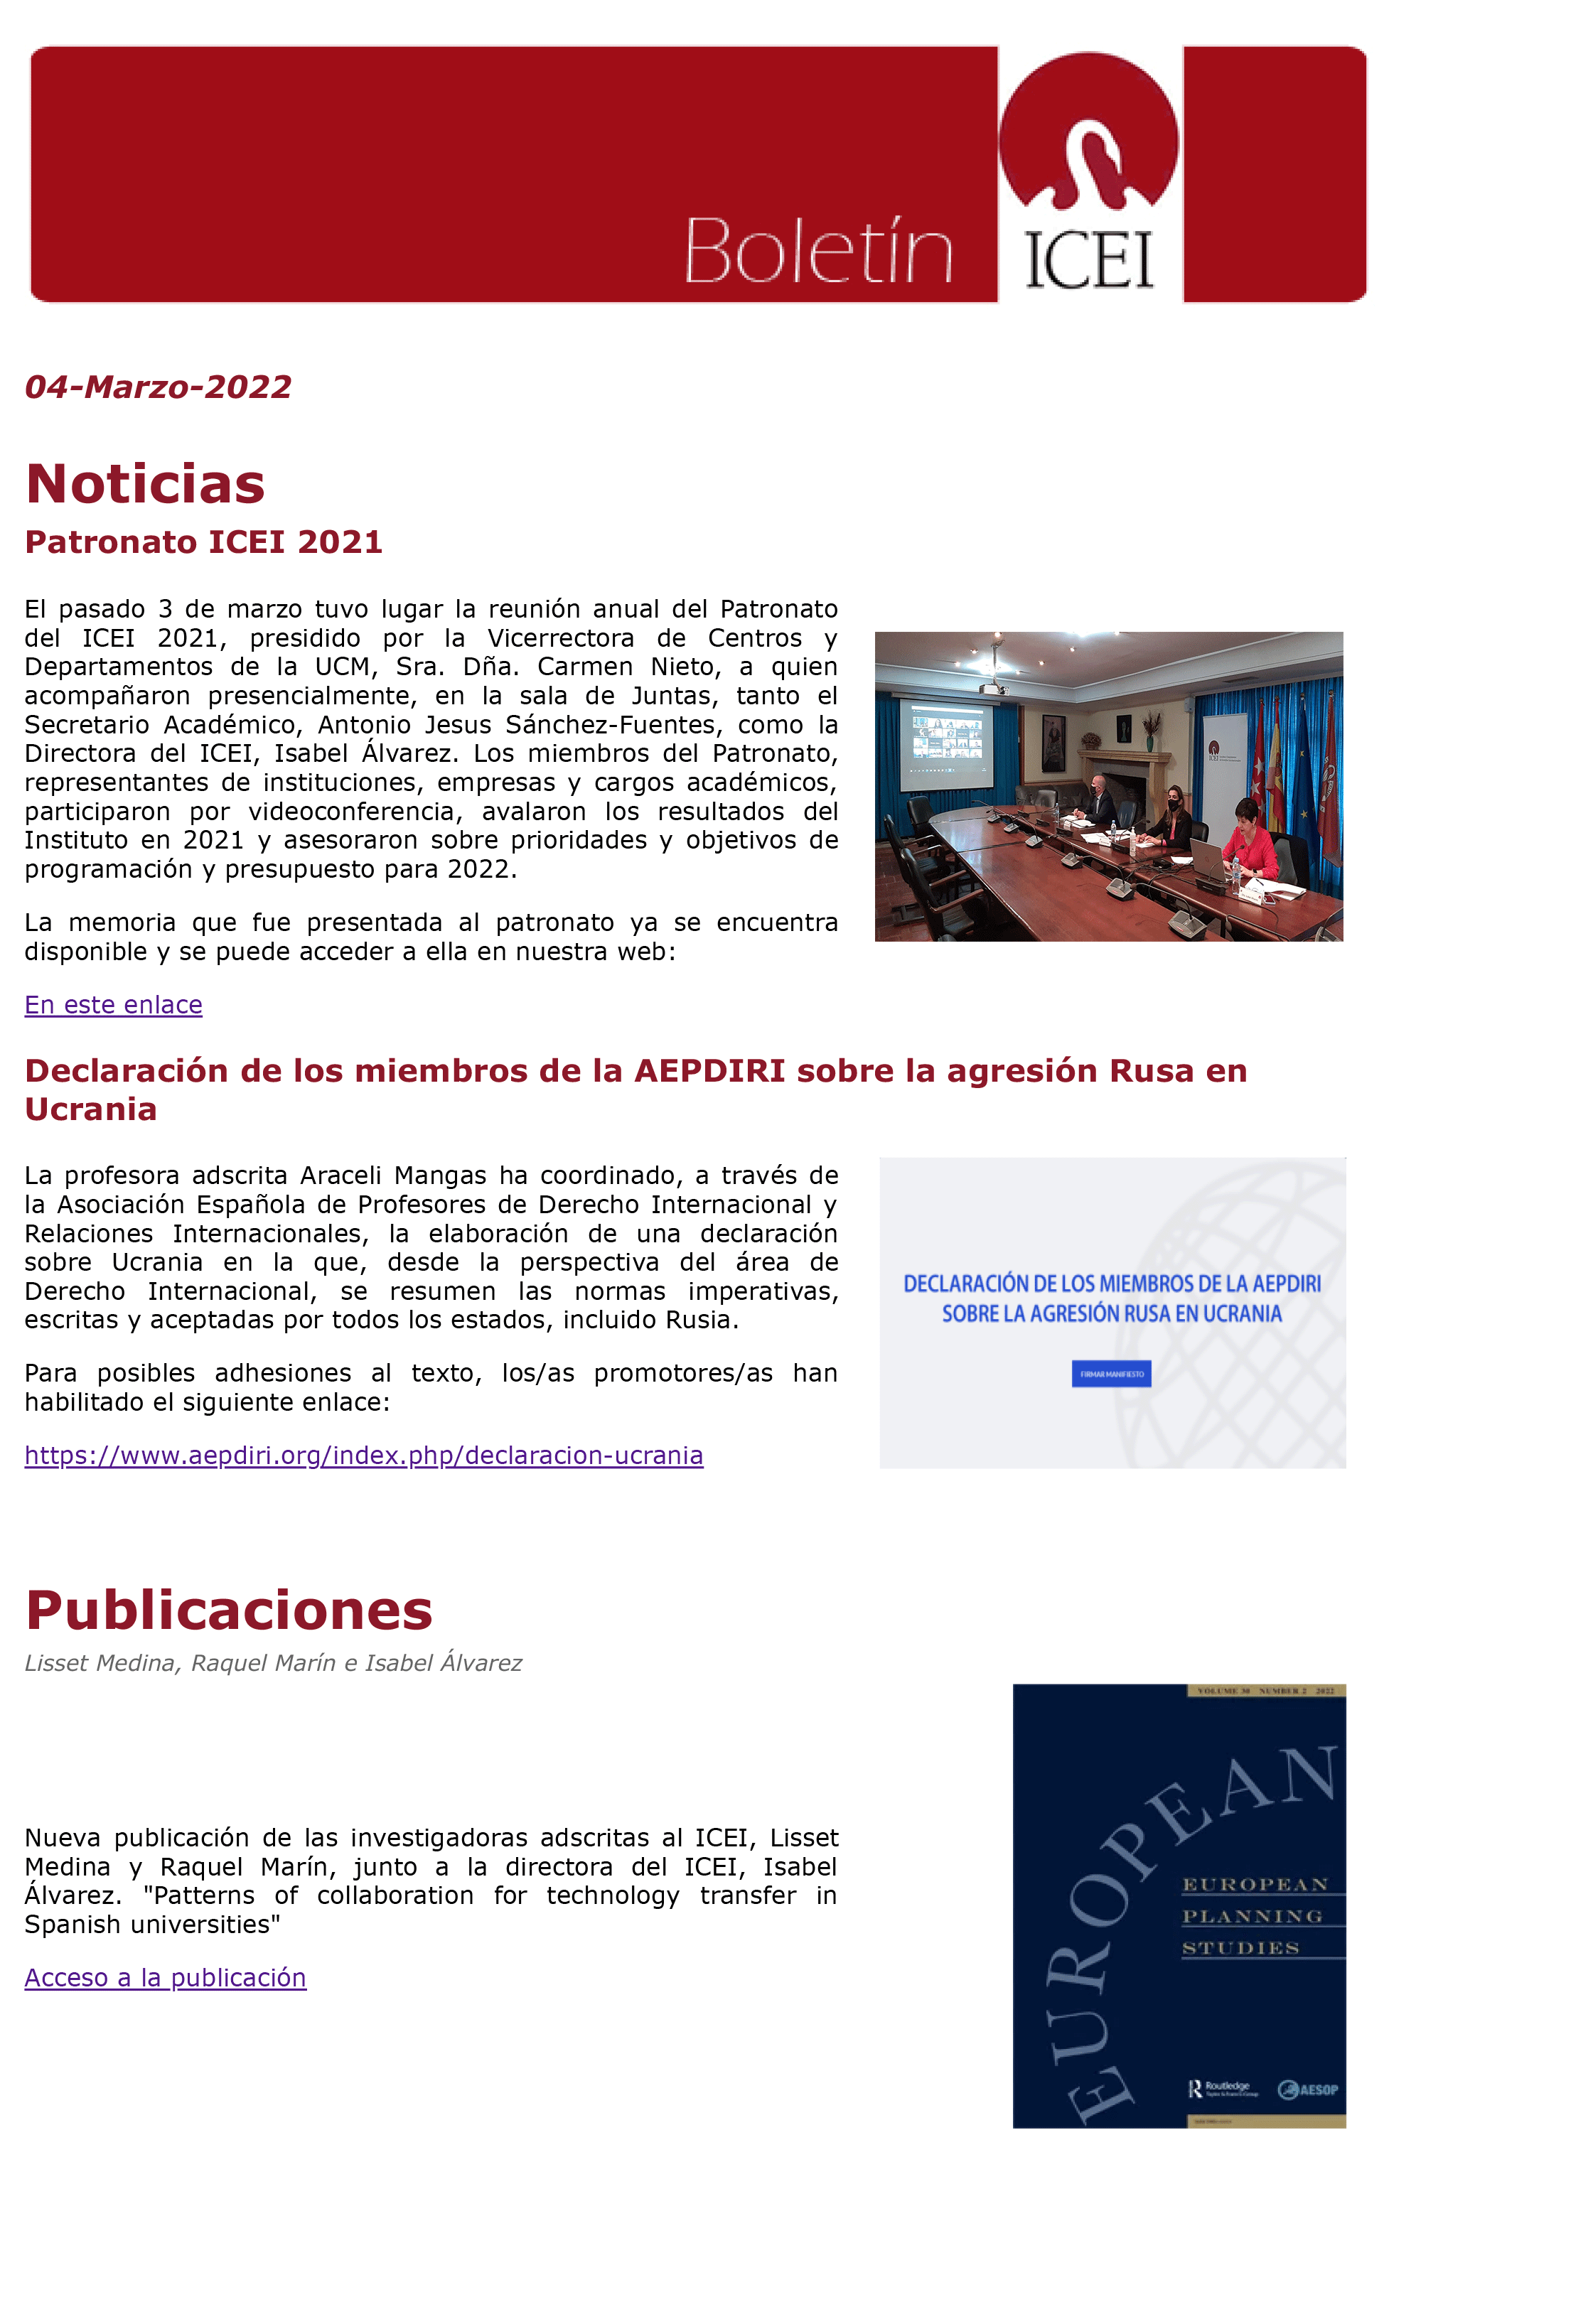 https://www.ucm.es/icei//file/04-03-22?ver